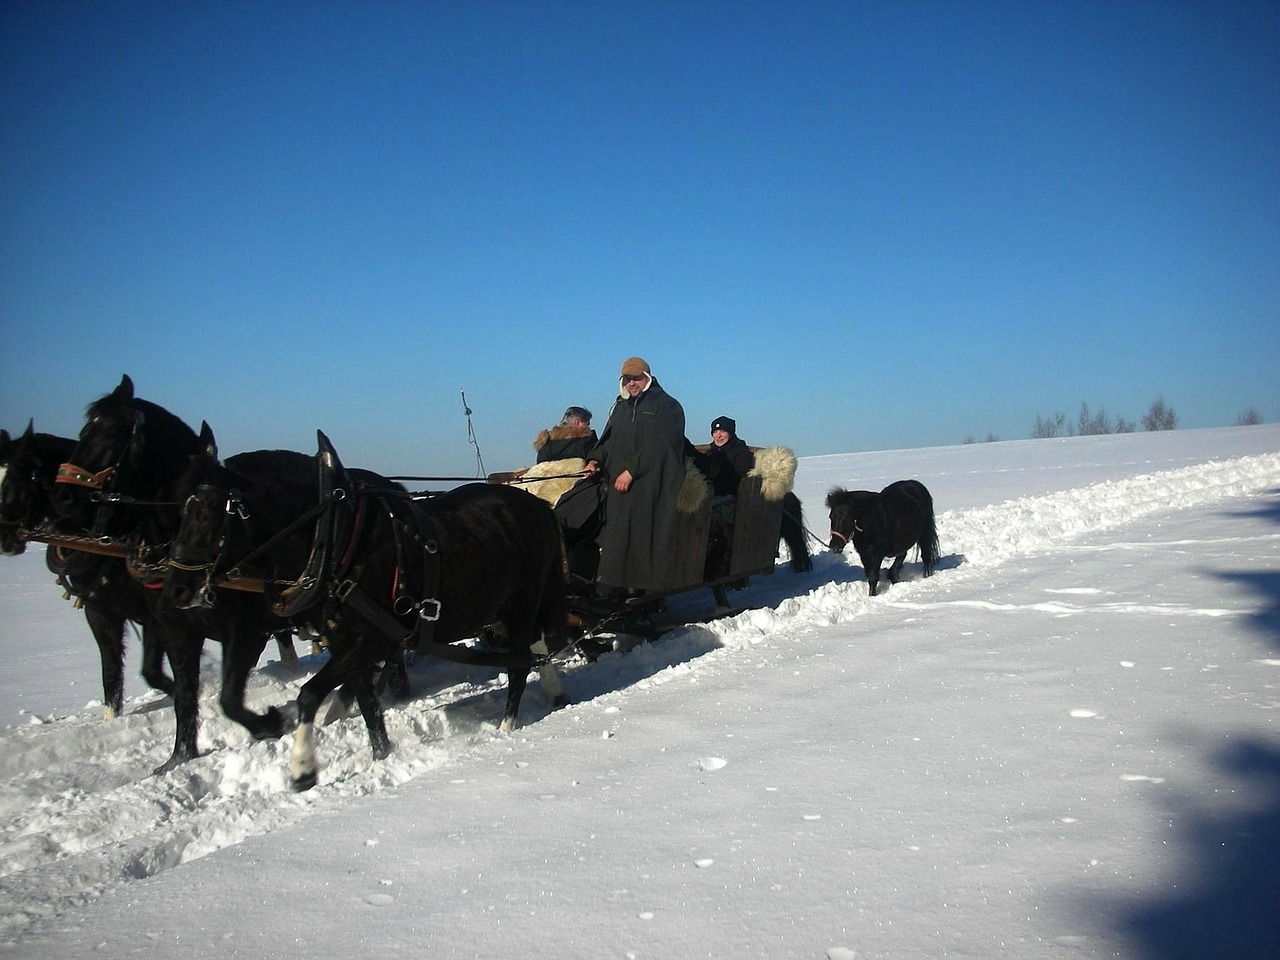 vogtland landscape winter free photo